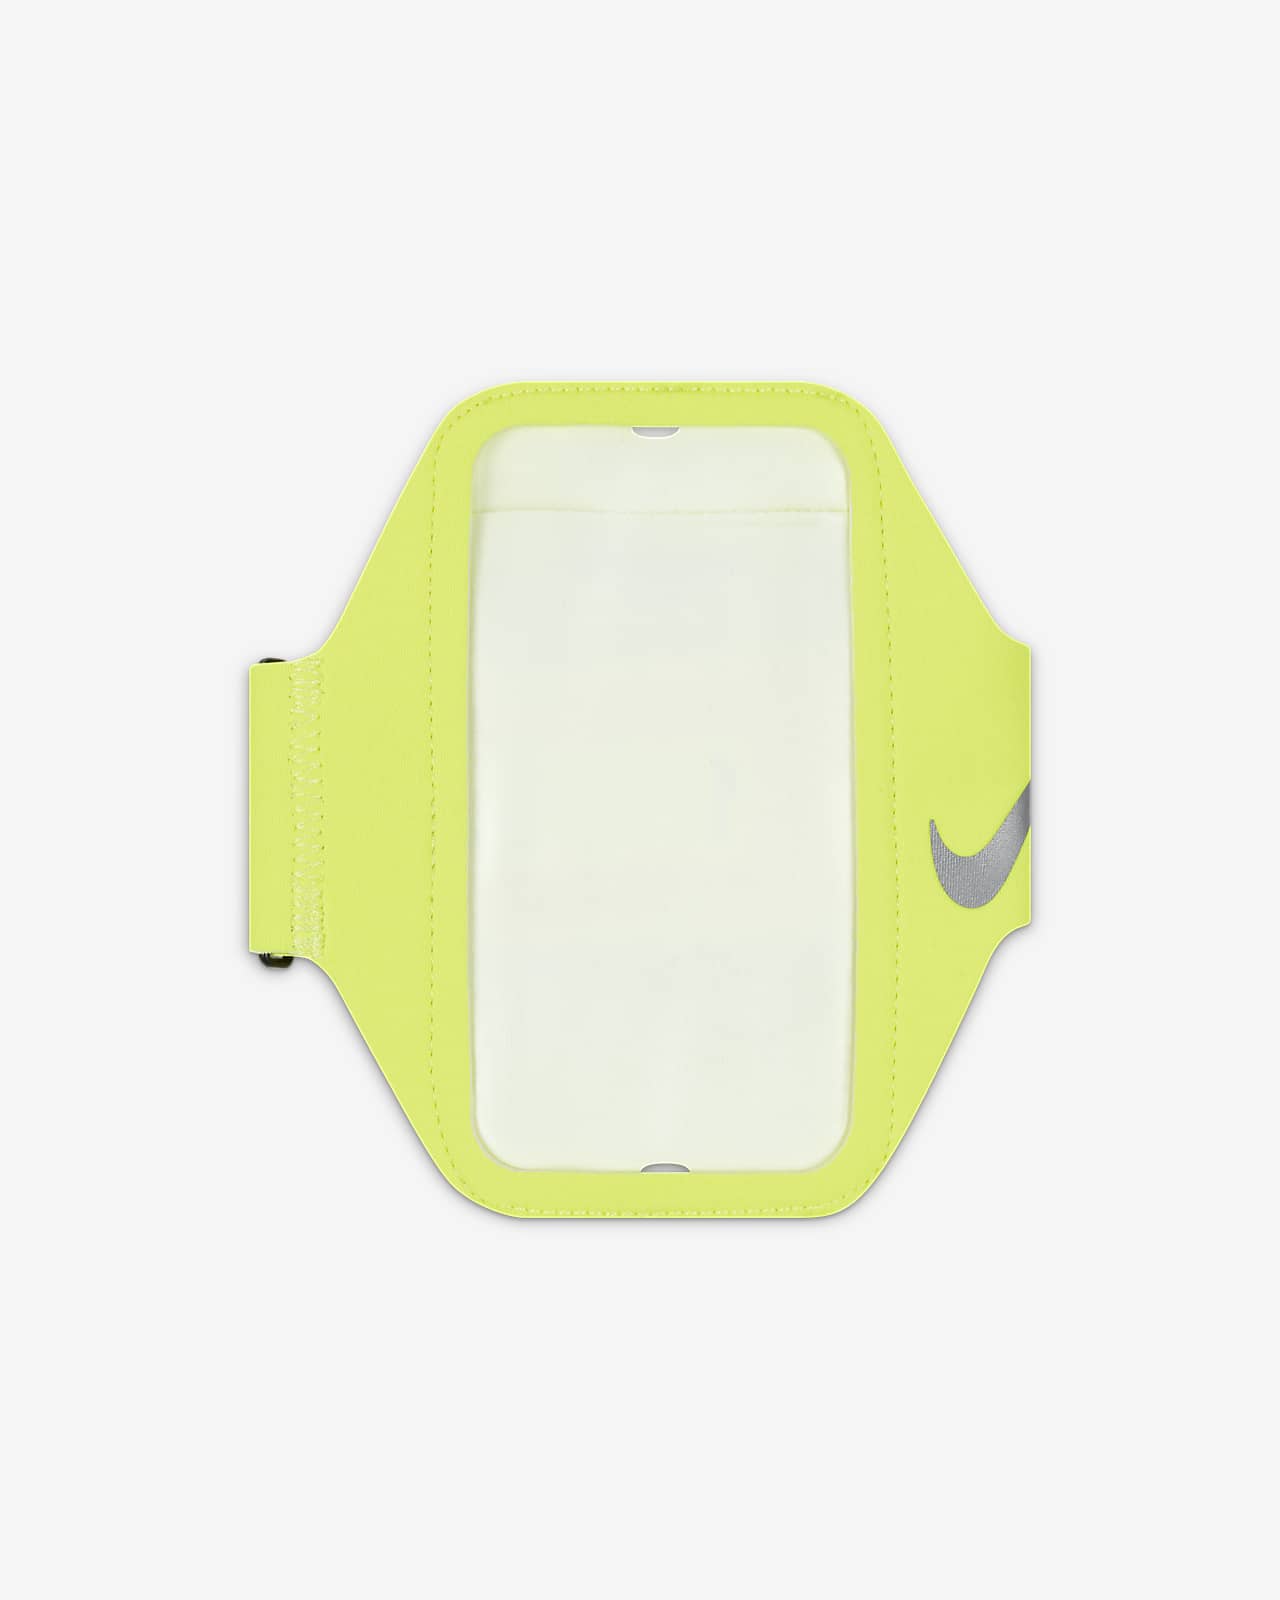 Armband Nike Lean